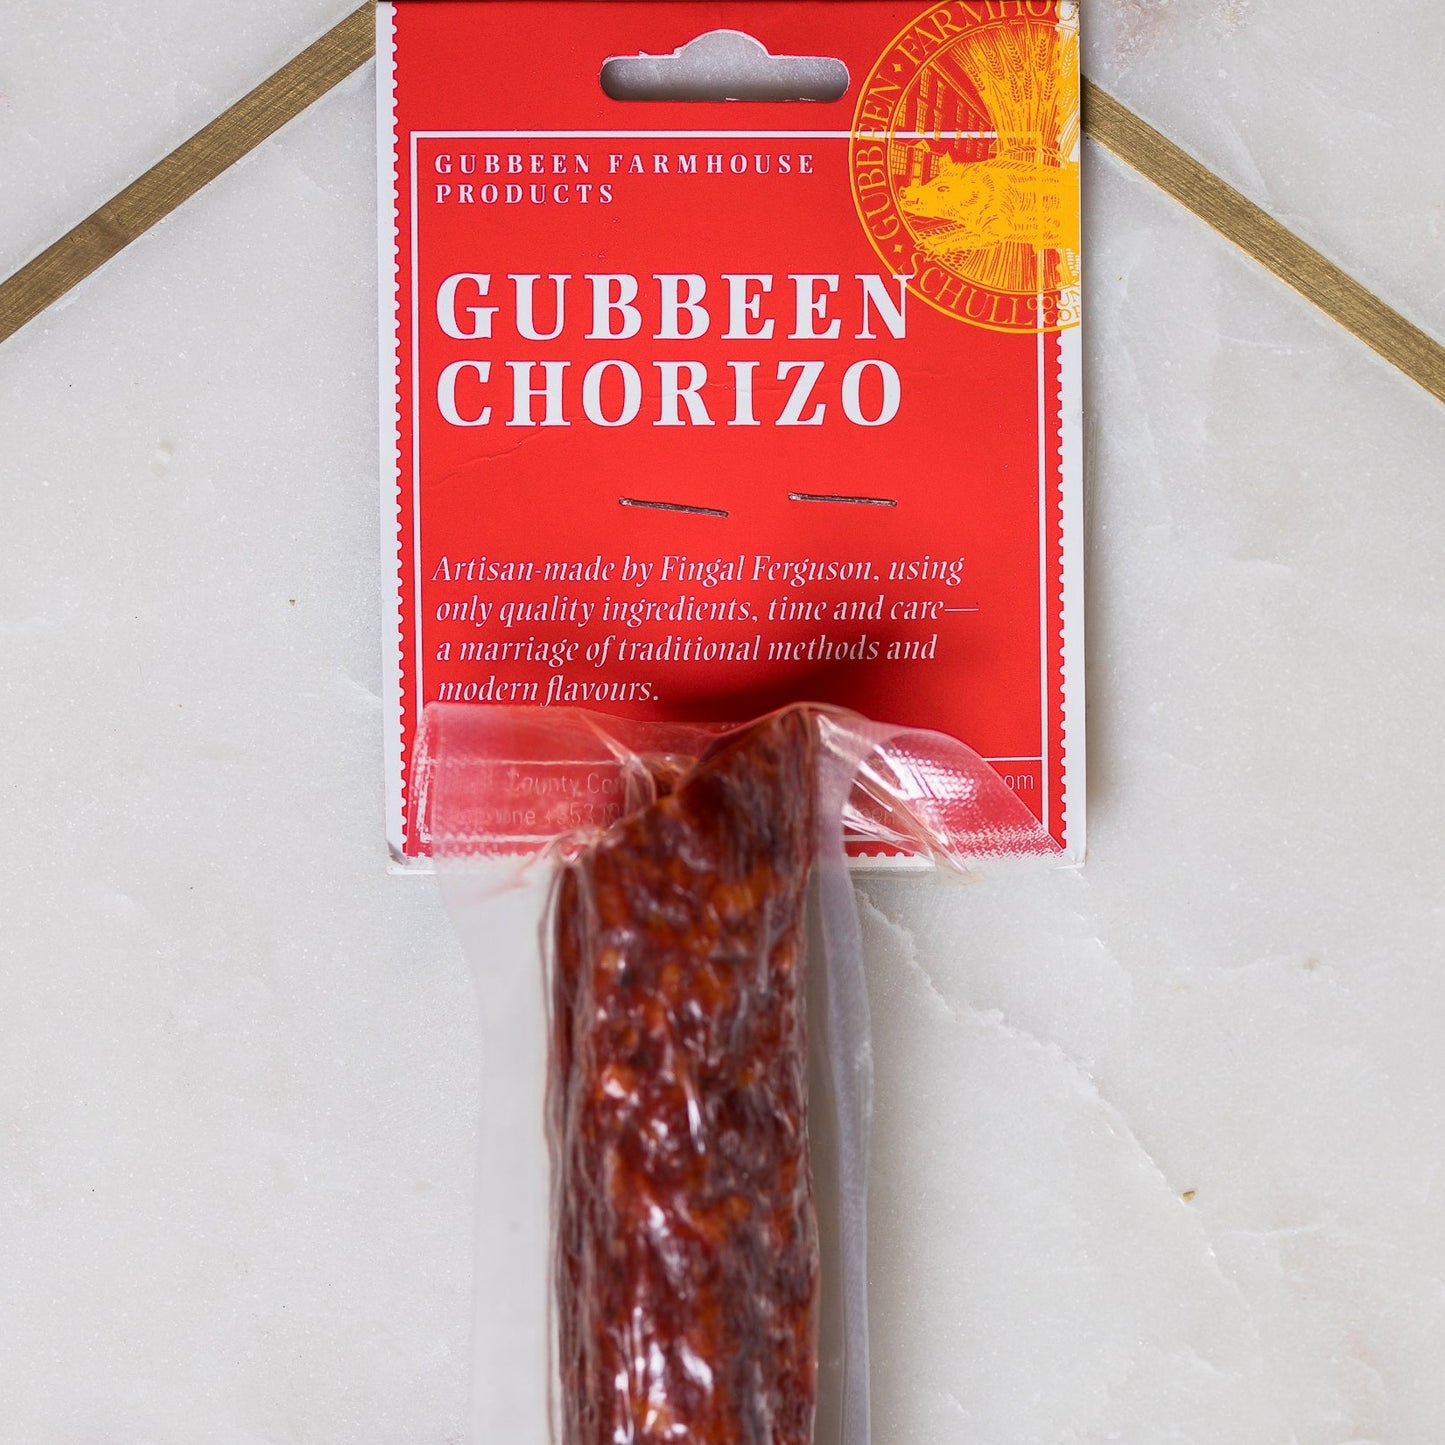 Gubbeen Chorizo